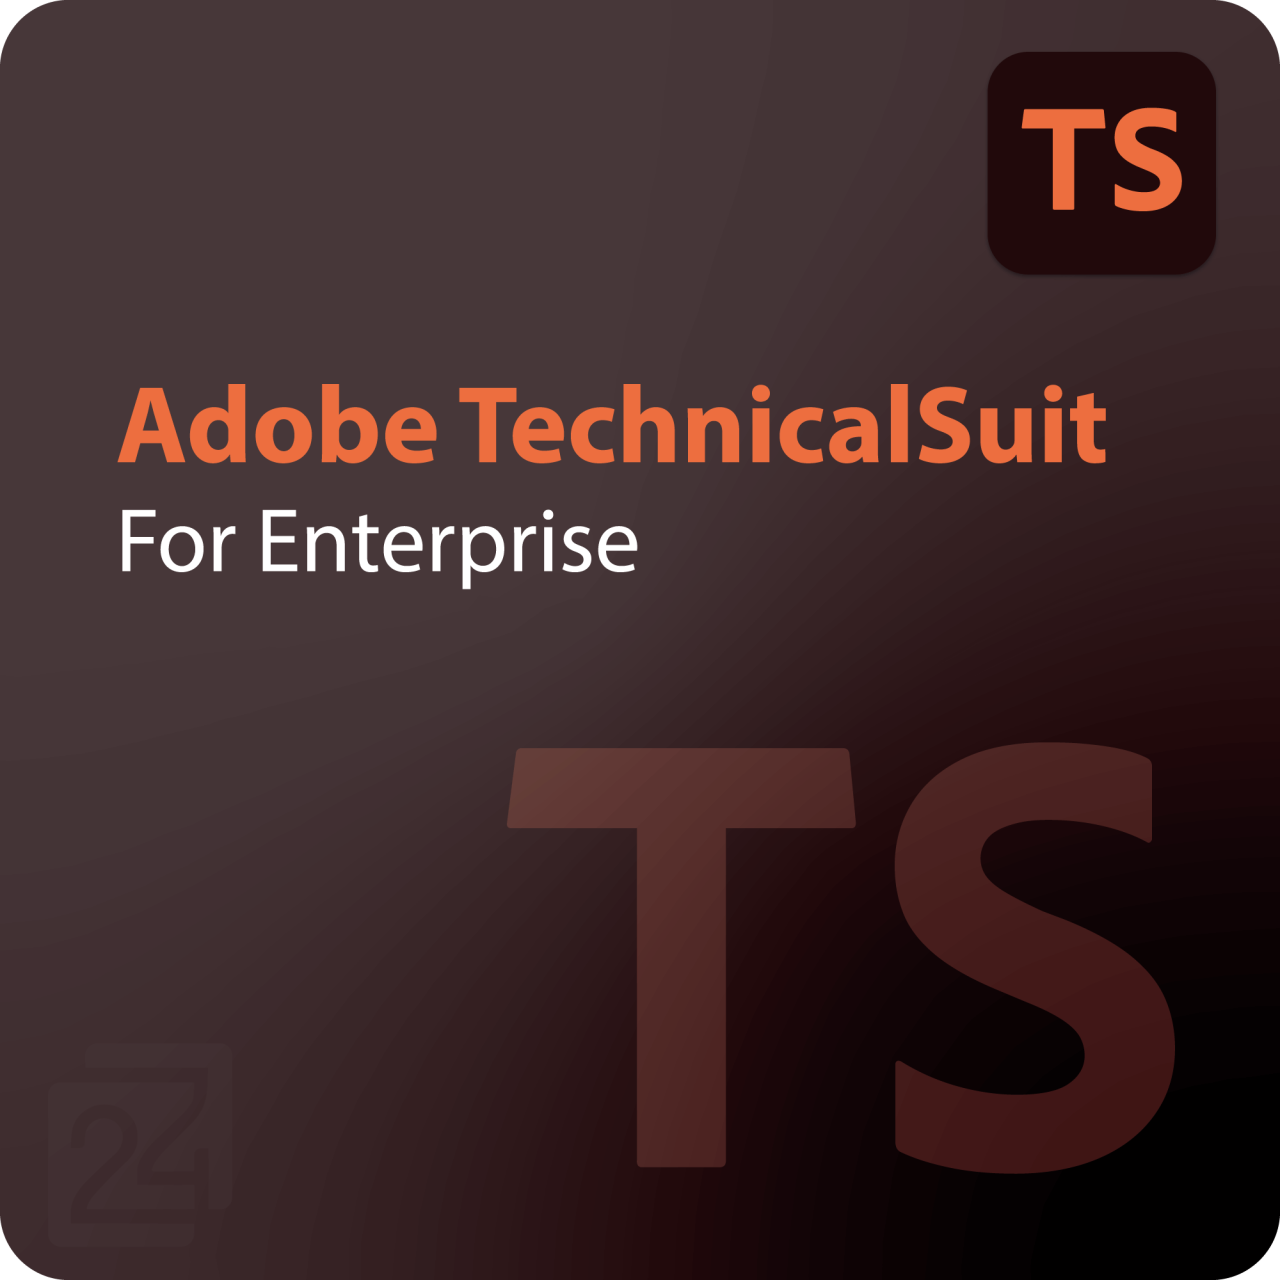 Adobe TechnicalSuit for Enterprise